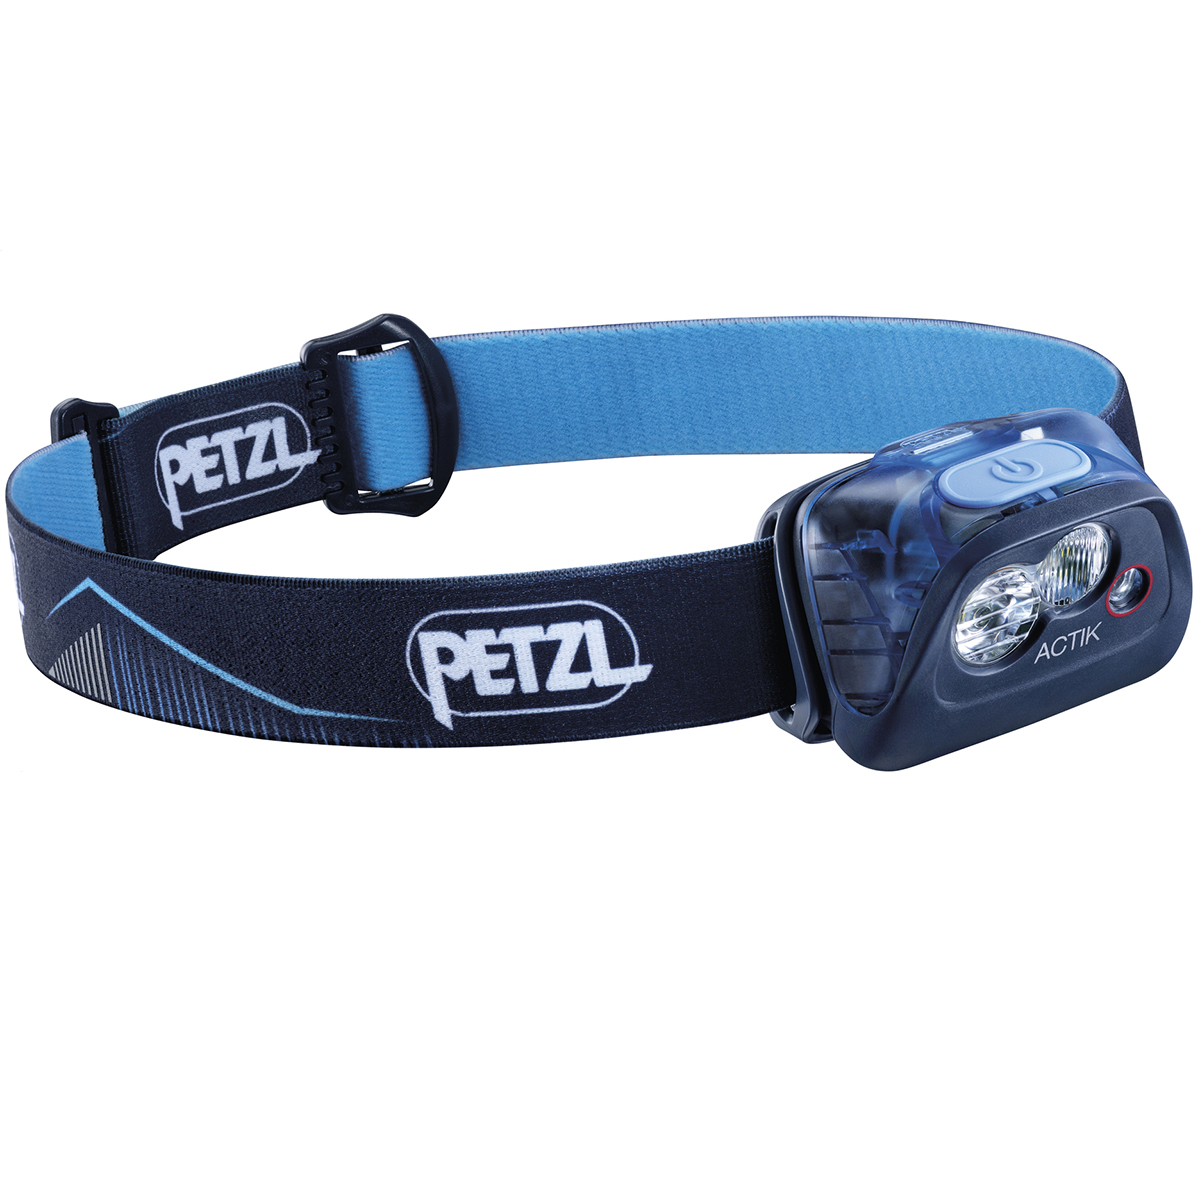 Petzl Actik Multi-Beam Headlamp